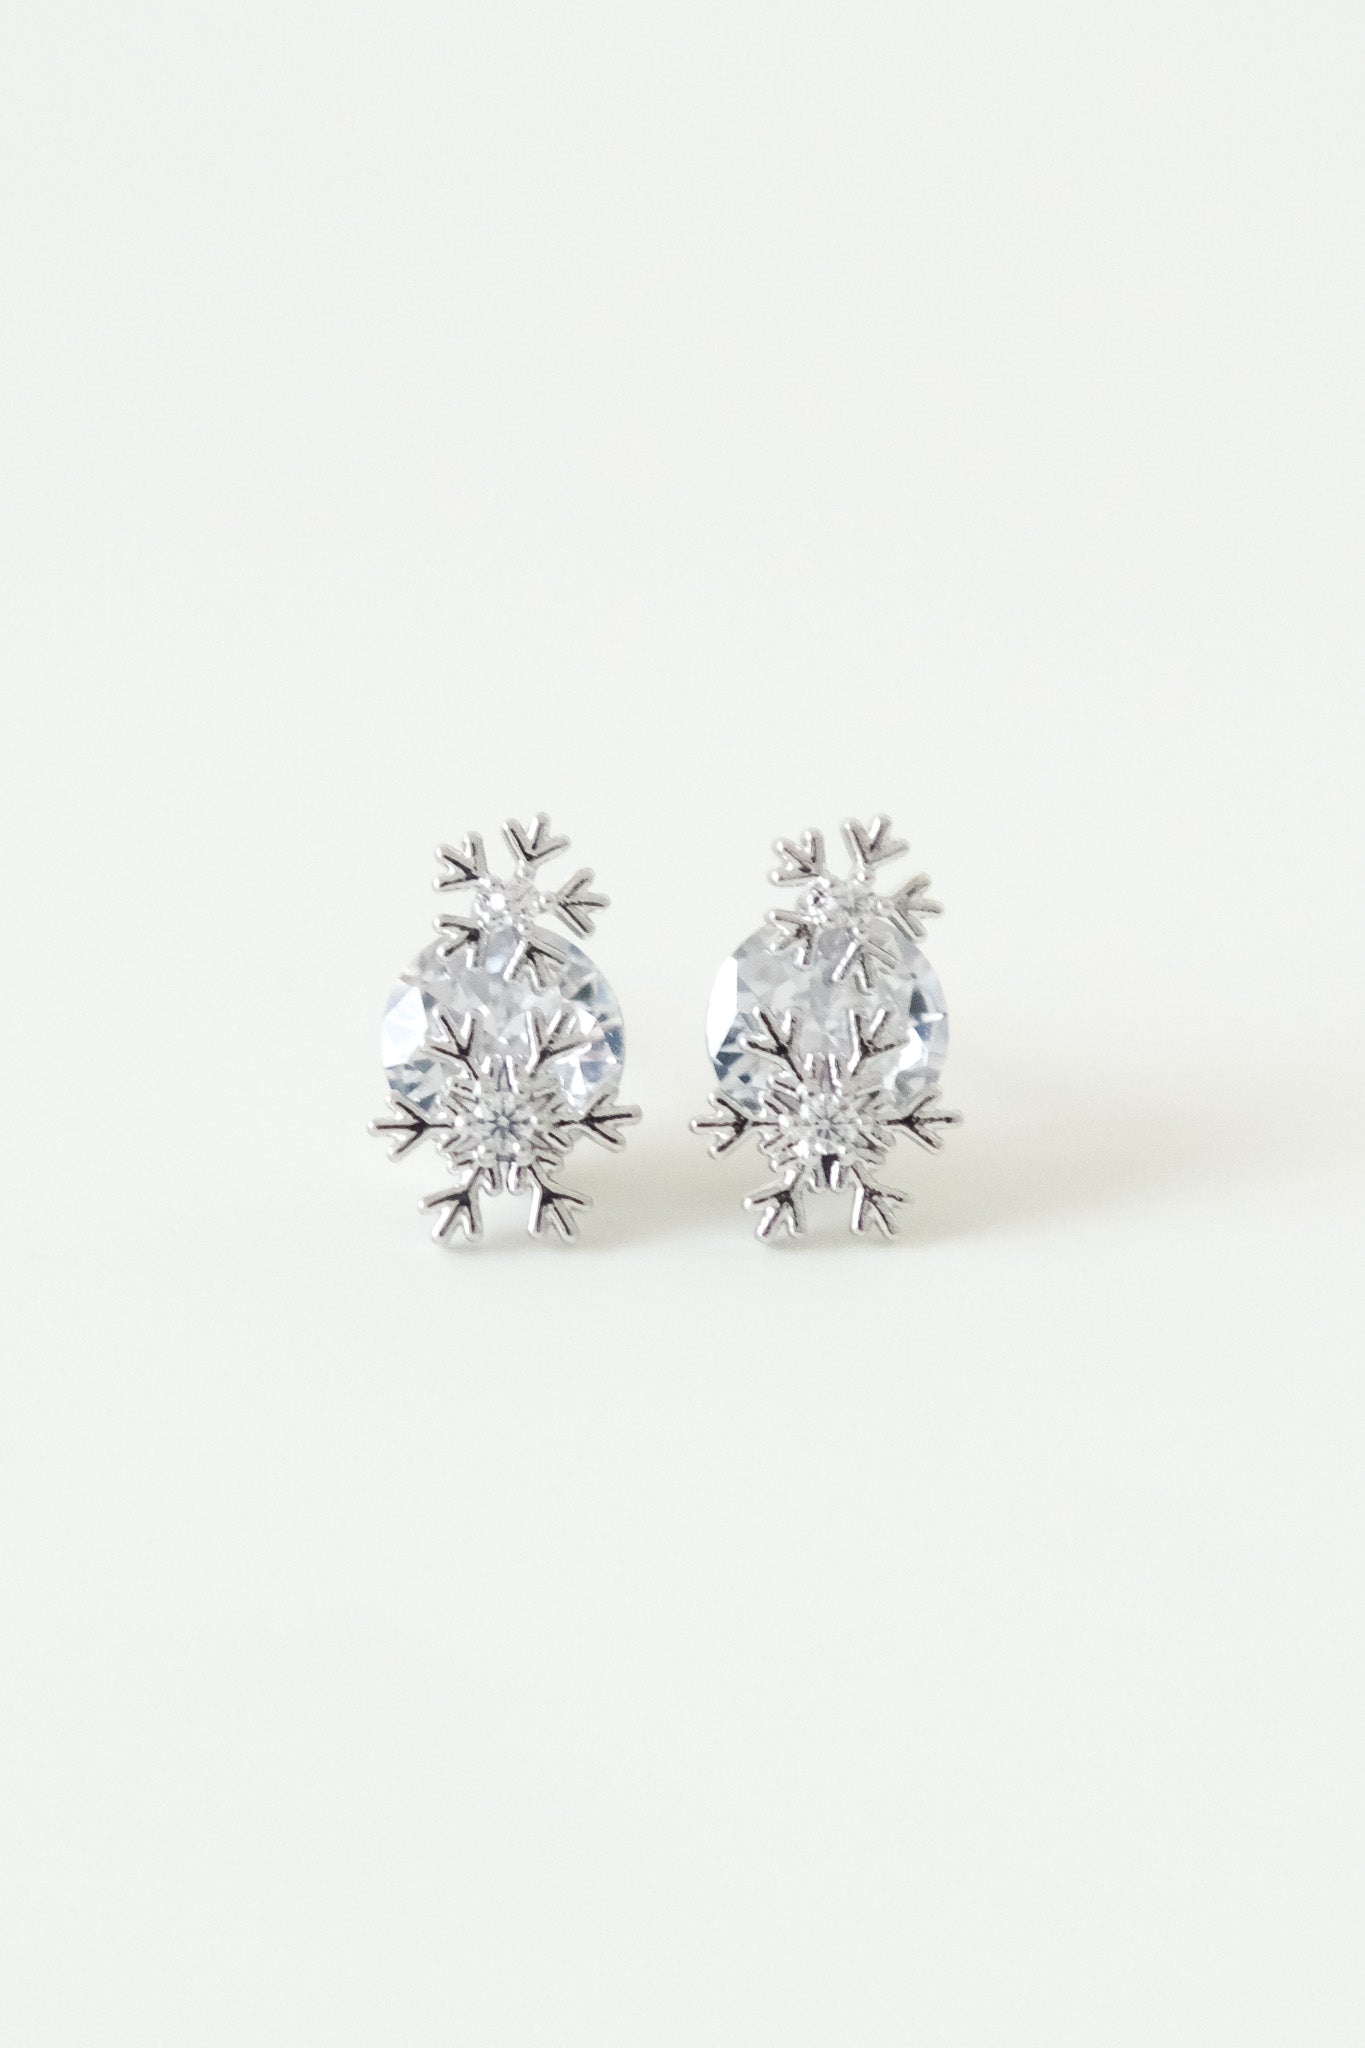 
                  
                    [XMAS] 23966 Snowflakes on Ice Cube Earrings
                  
                